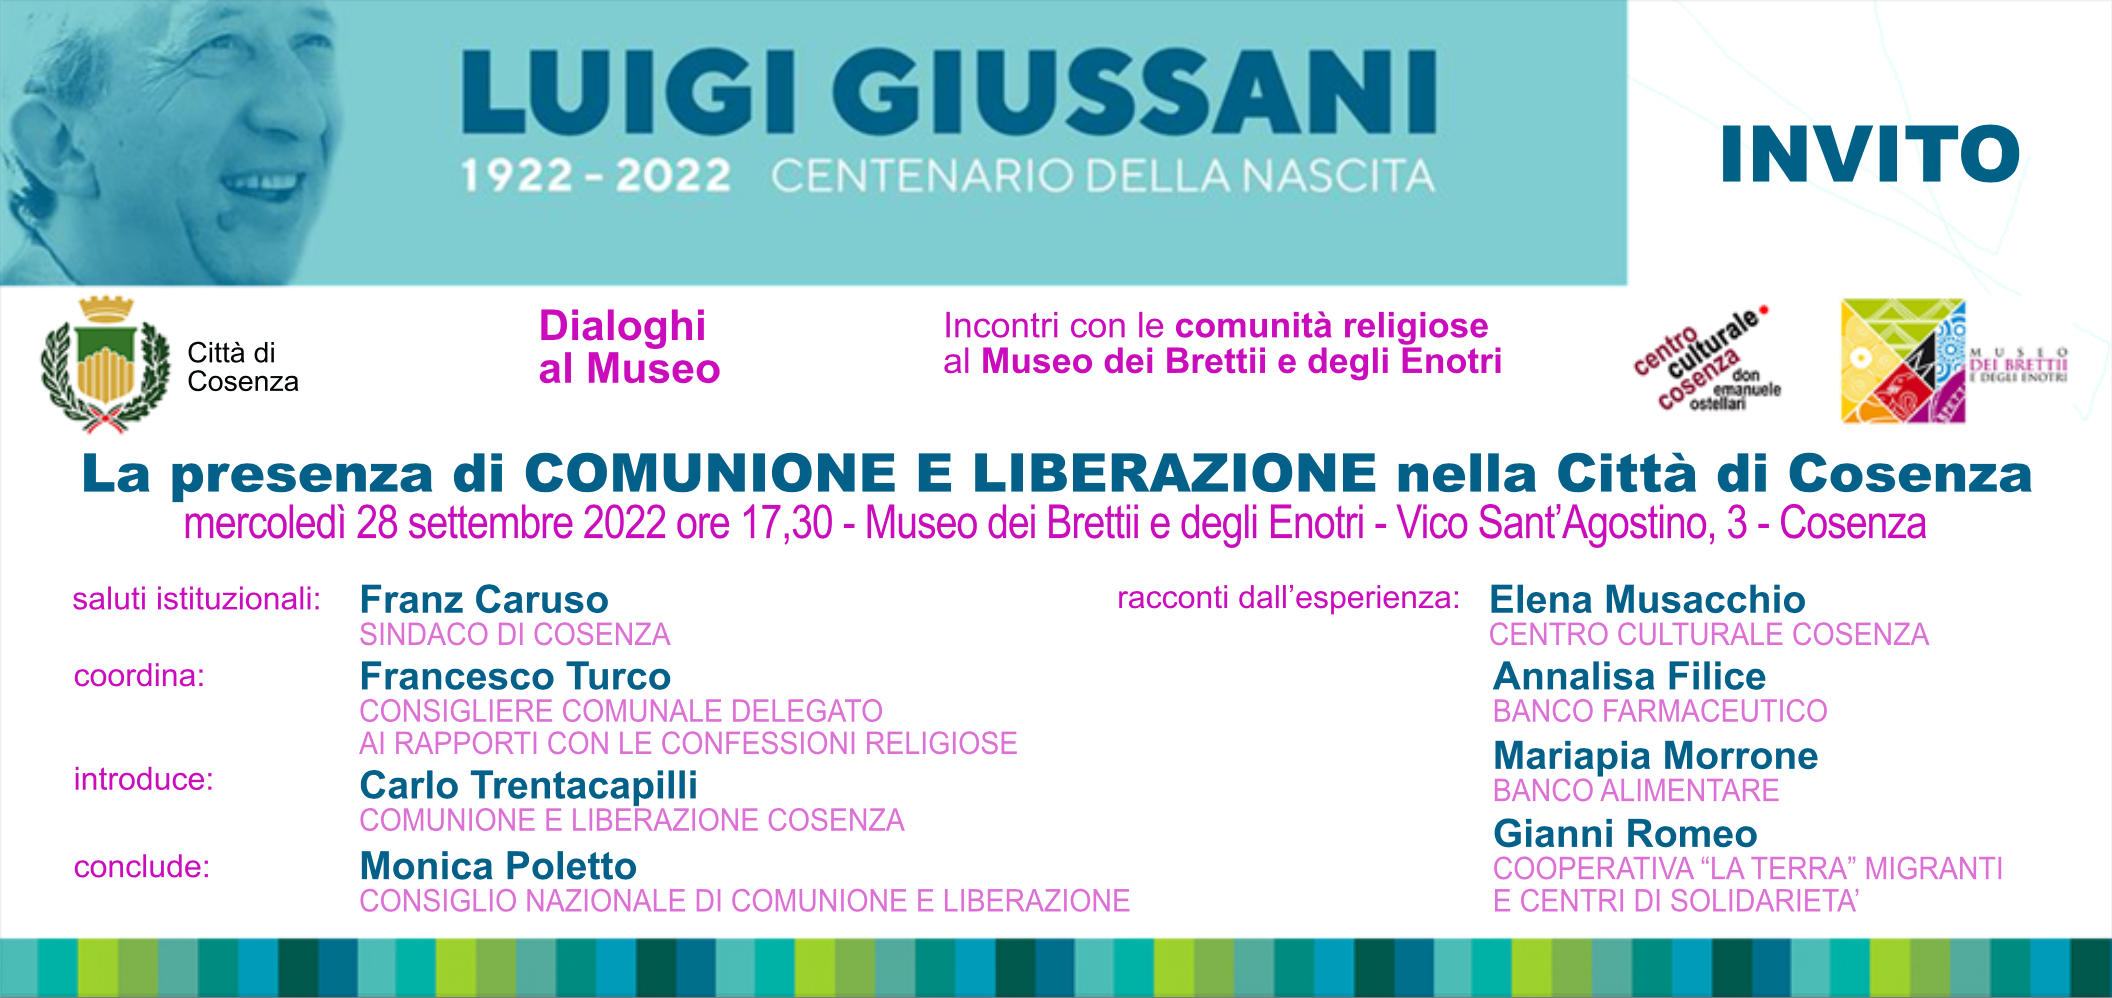 Featured image for “Cosenza: Luigi Giussani”